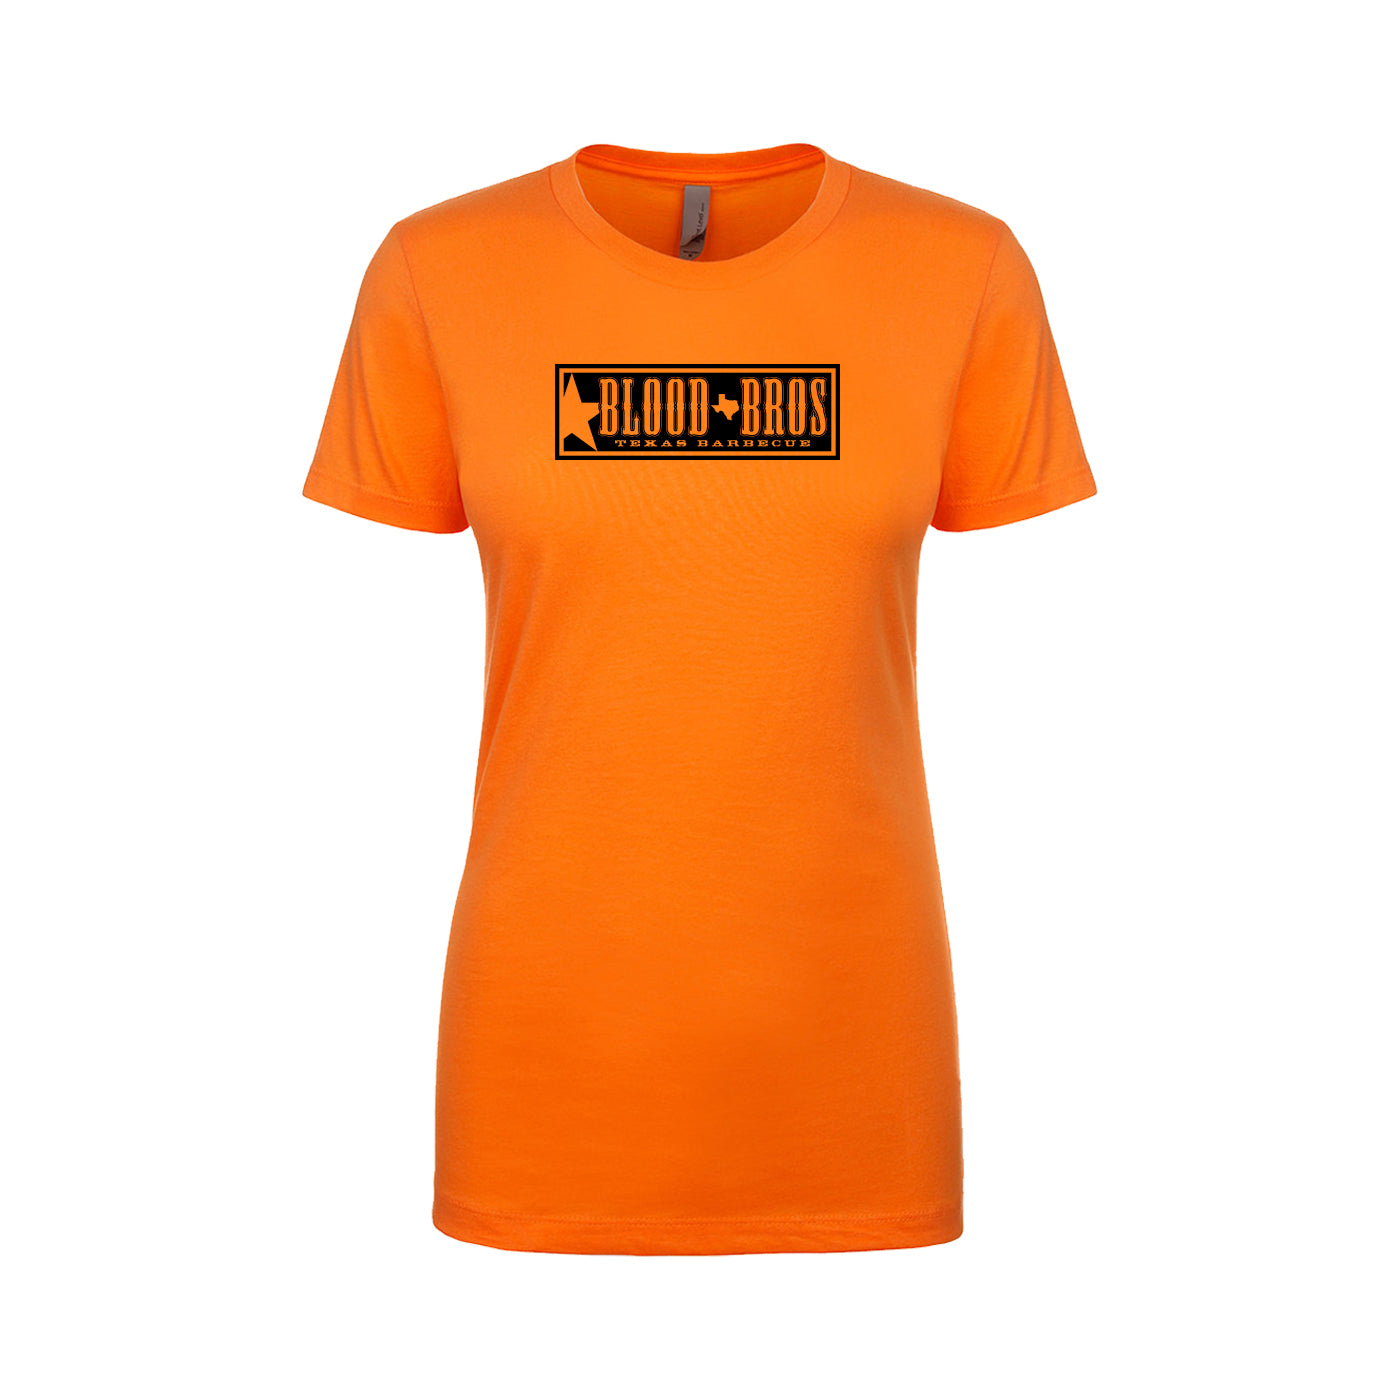 LOGO Tshirt Ladies Short Sleeve - Classic Orange